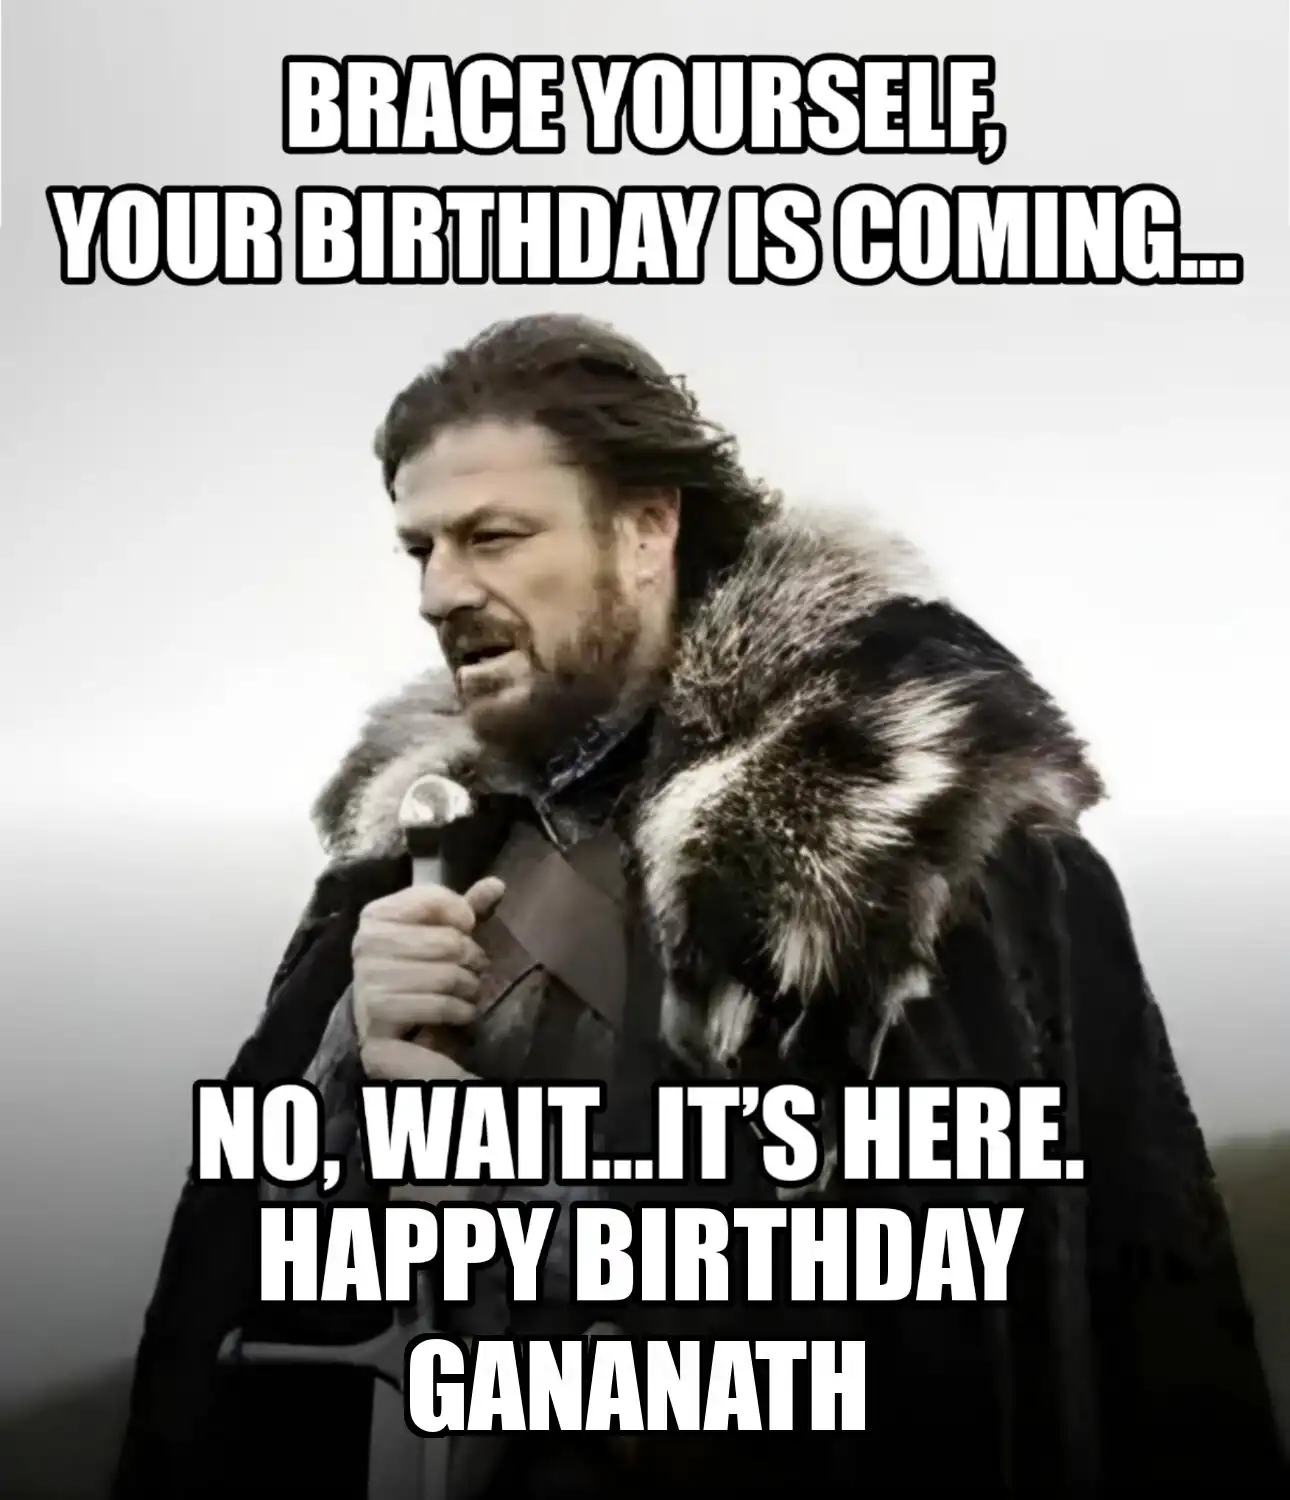 Happy Birthday Gananath Brace Yourself Your Birthday Is Coming Meme